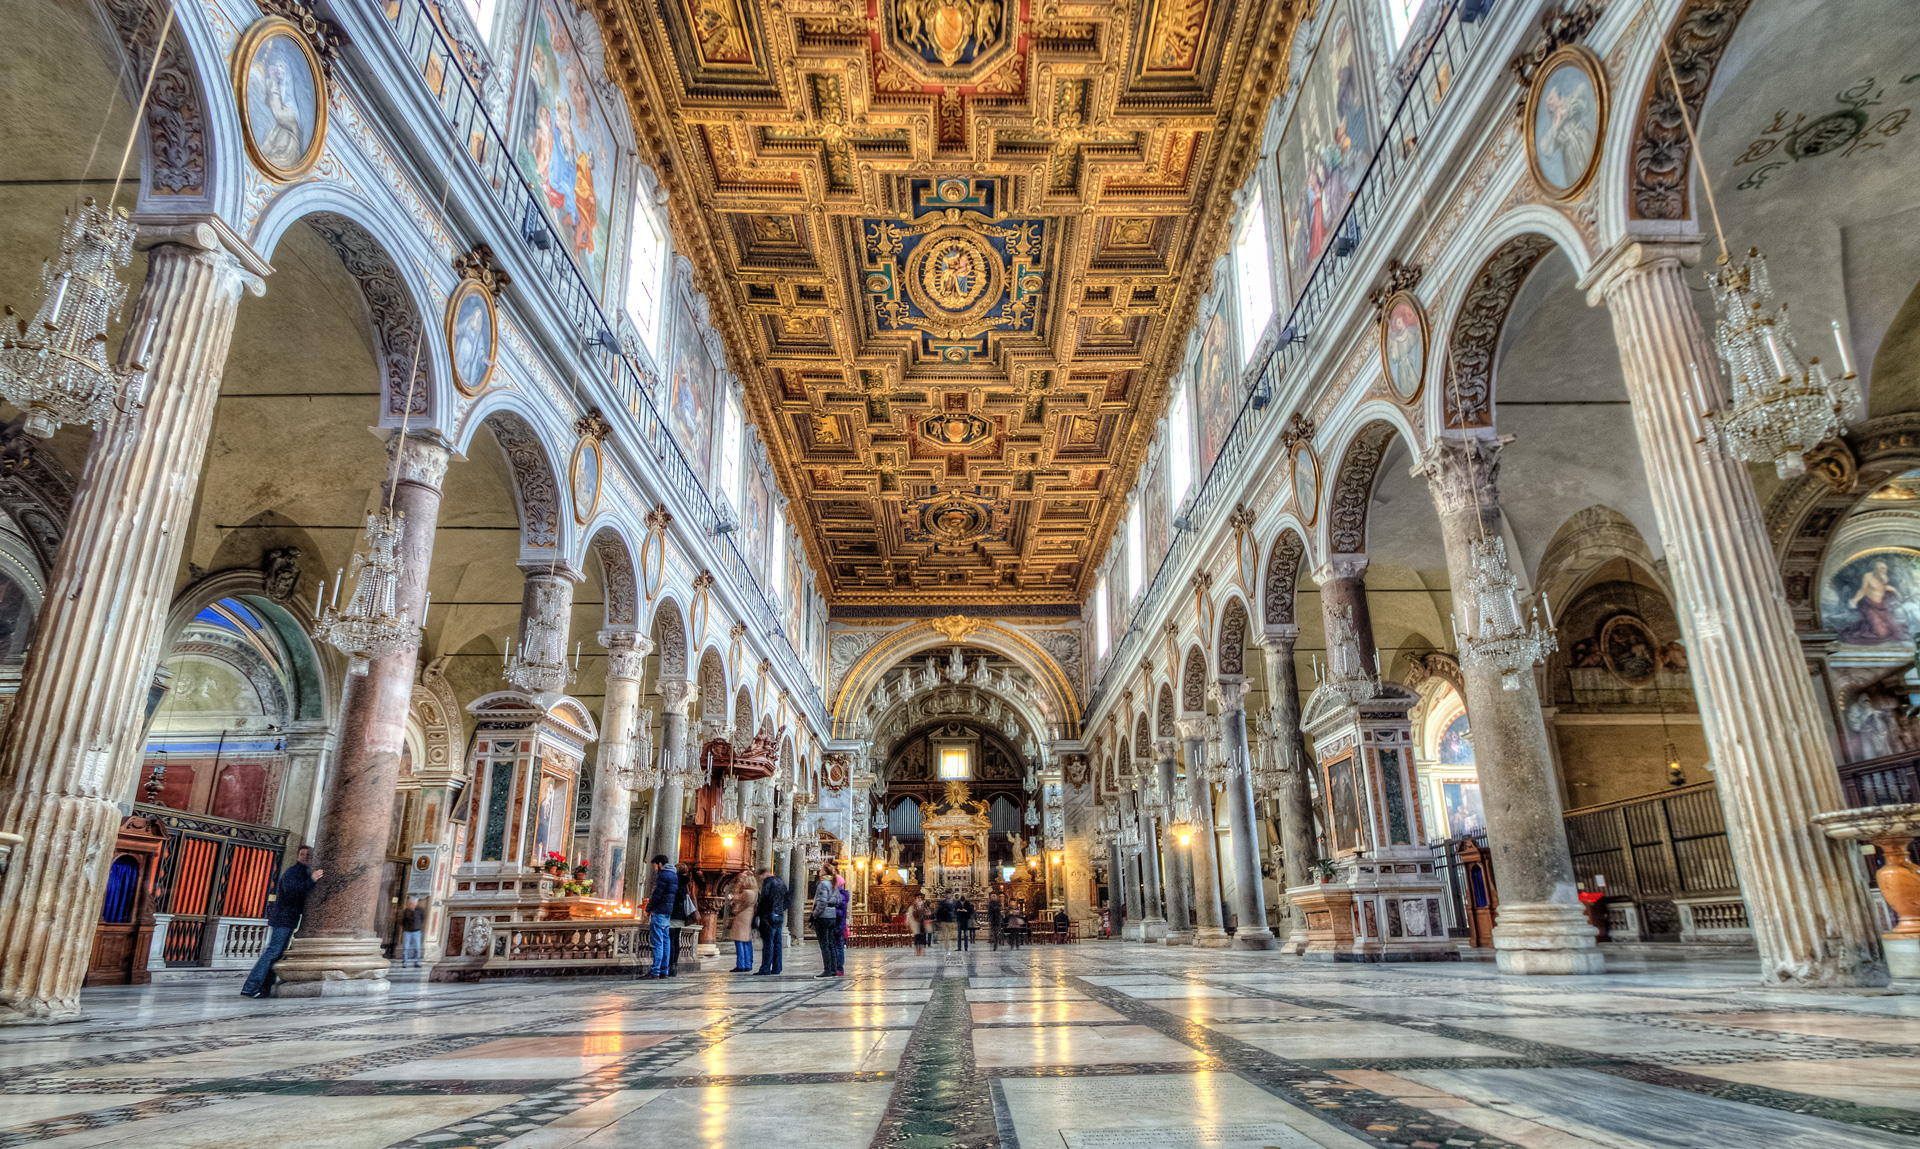 Central nave of the Basilica of Santa Maria in Aracoeli